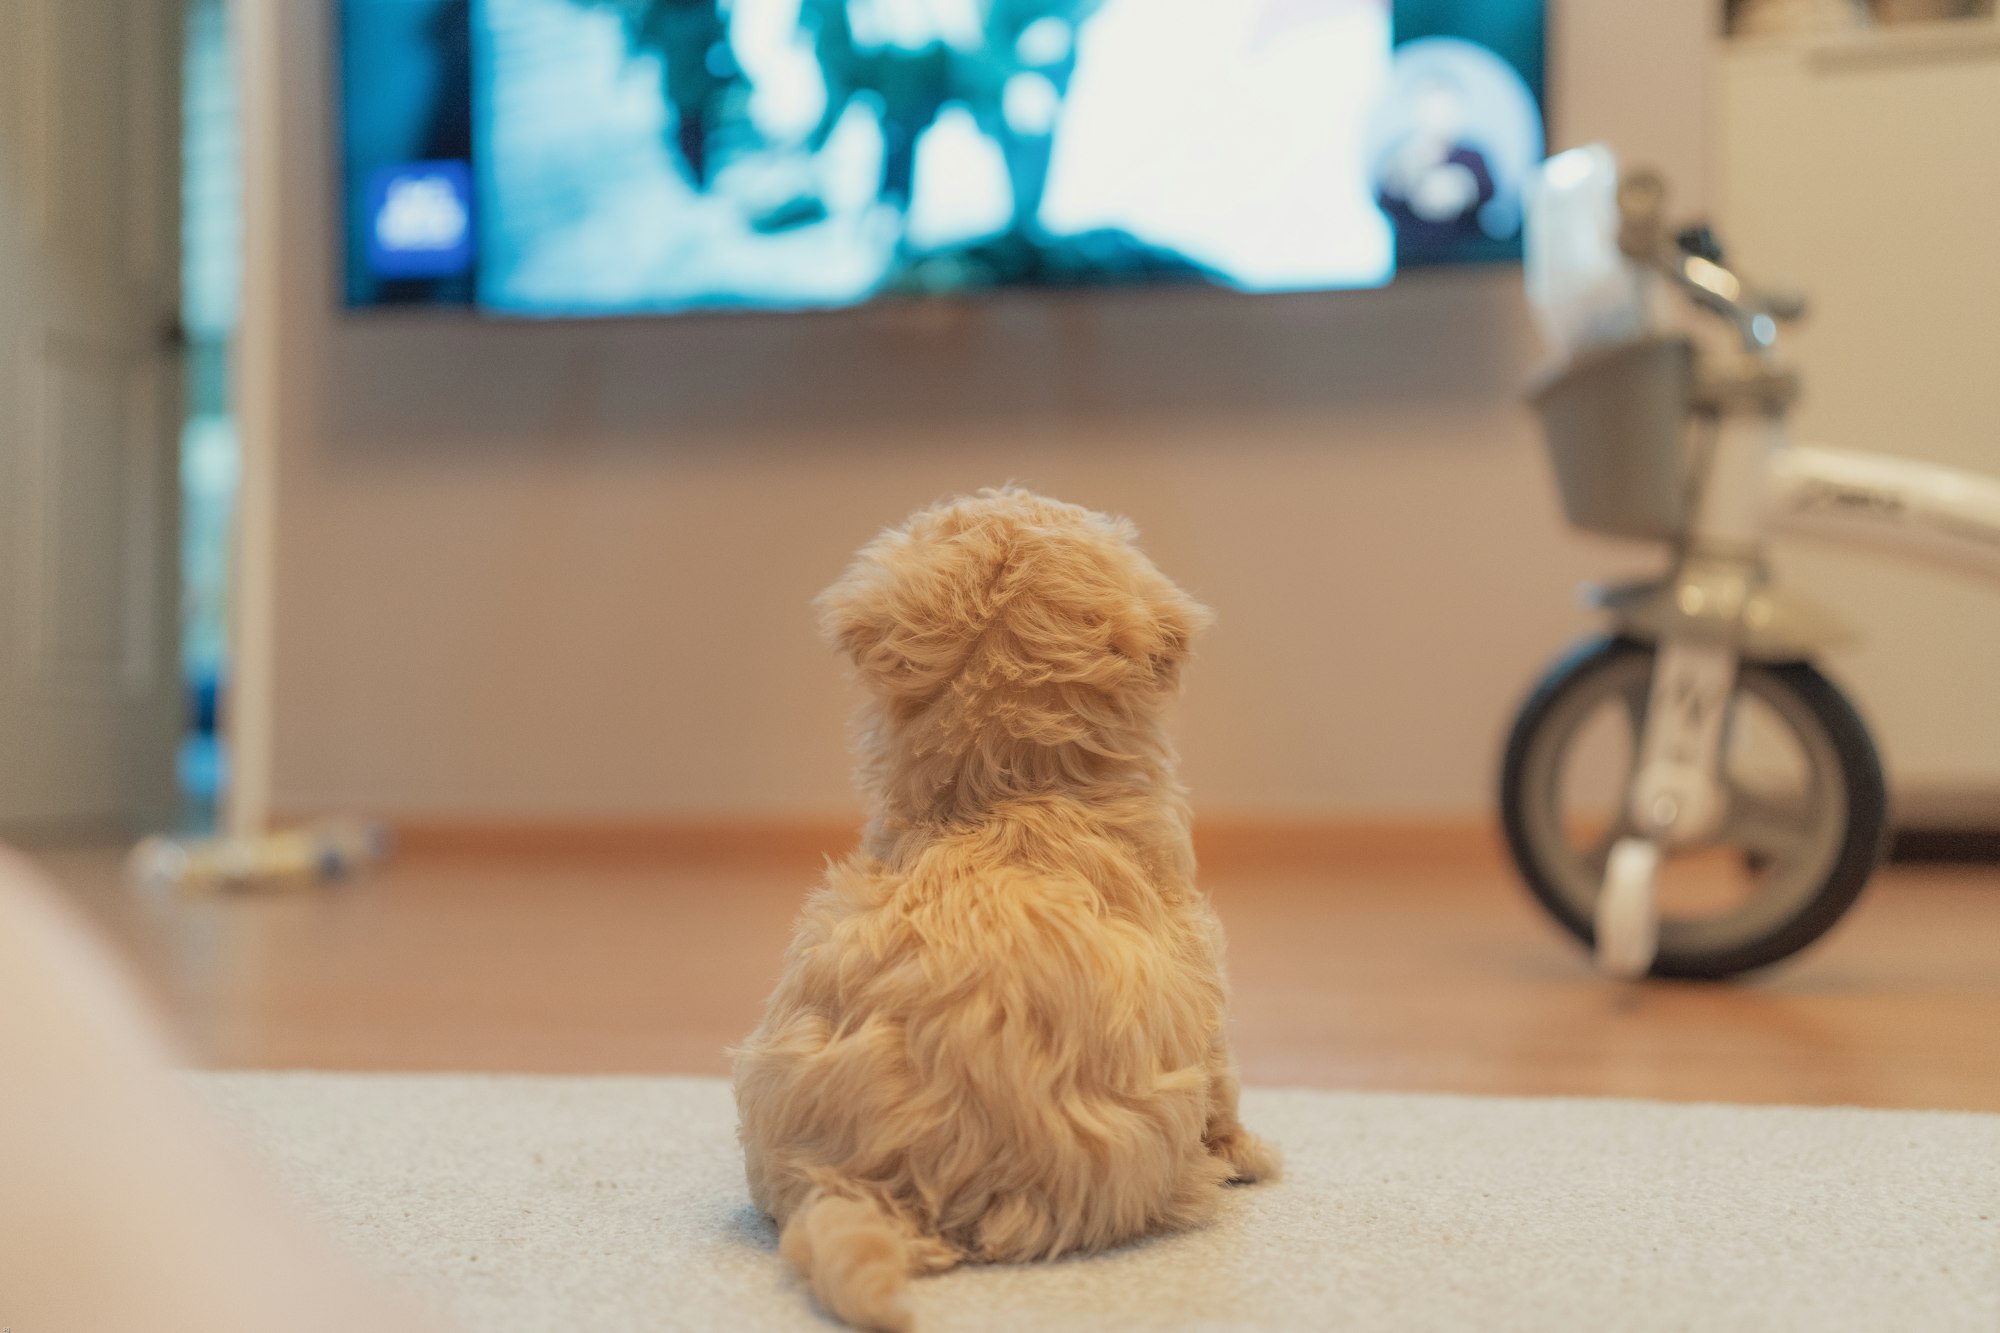 A puppy watching TV.